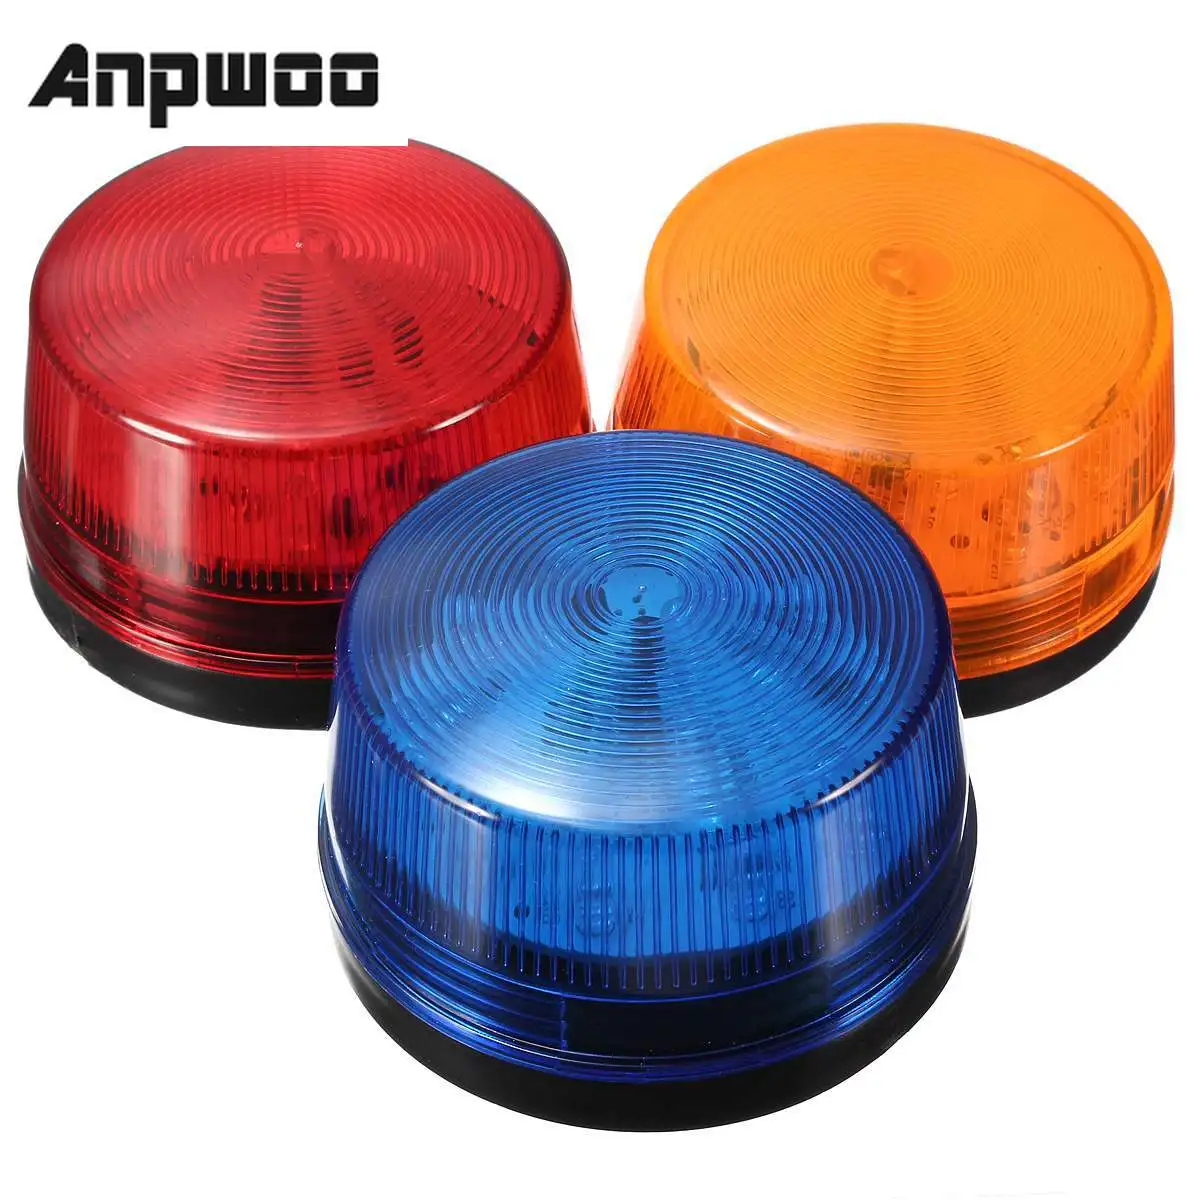 

ANPWOO High Quality Waterproof 12V 120mA Safely Security Alarm Strobe Signal Safety Warning Blue Red Orange Flashing LED Light